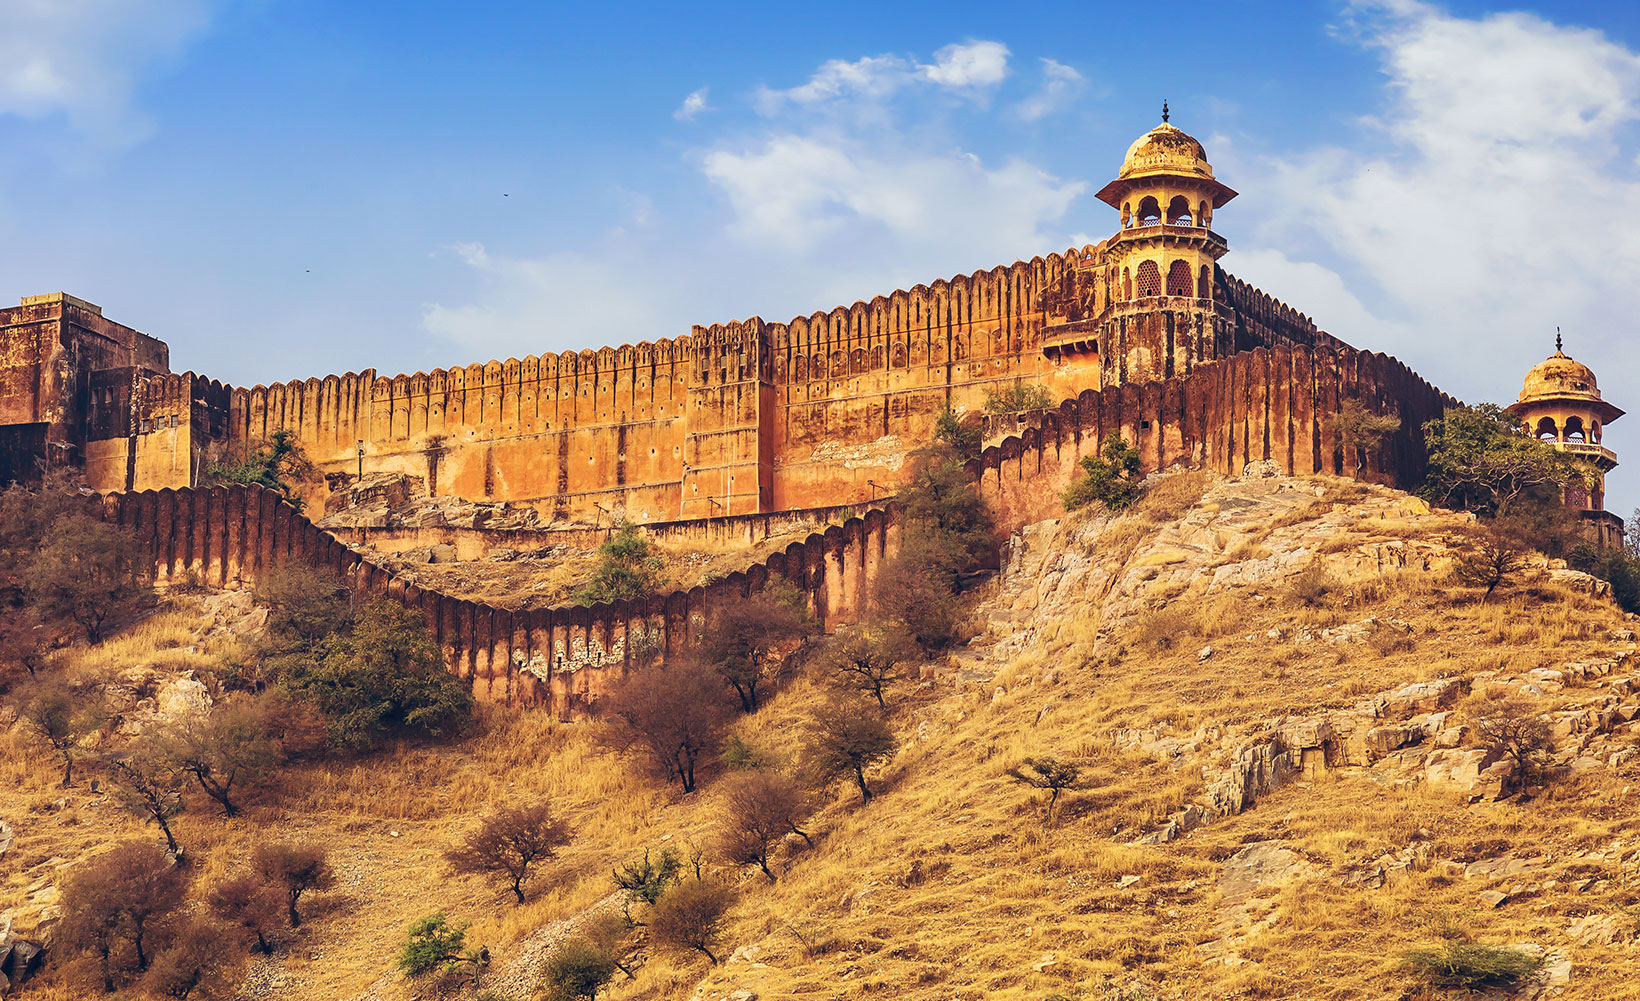 Jaipur certificado como Património Mundial pela UNESCO